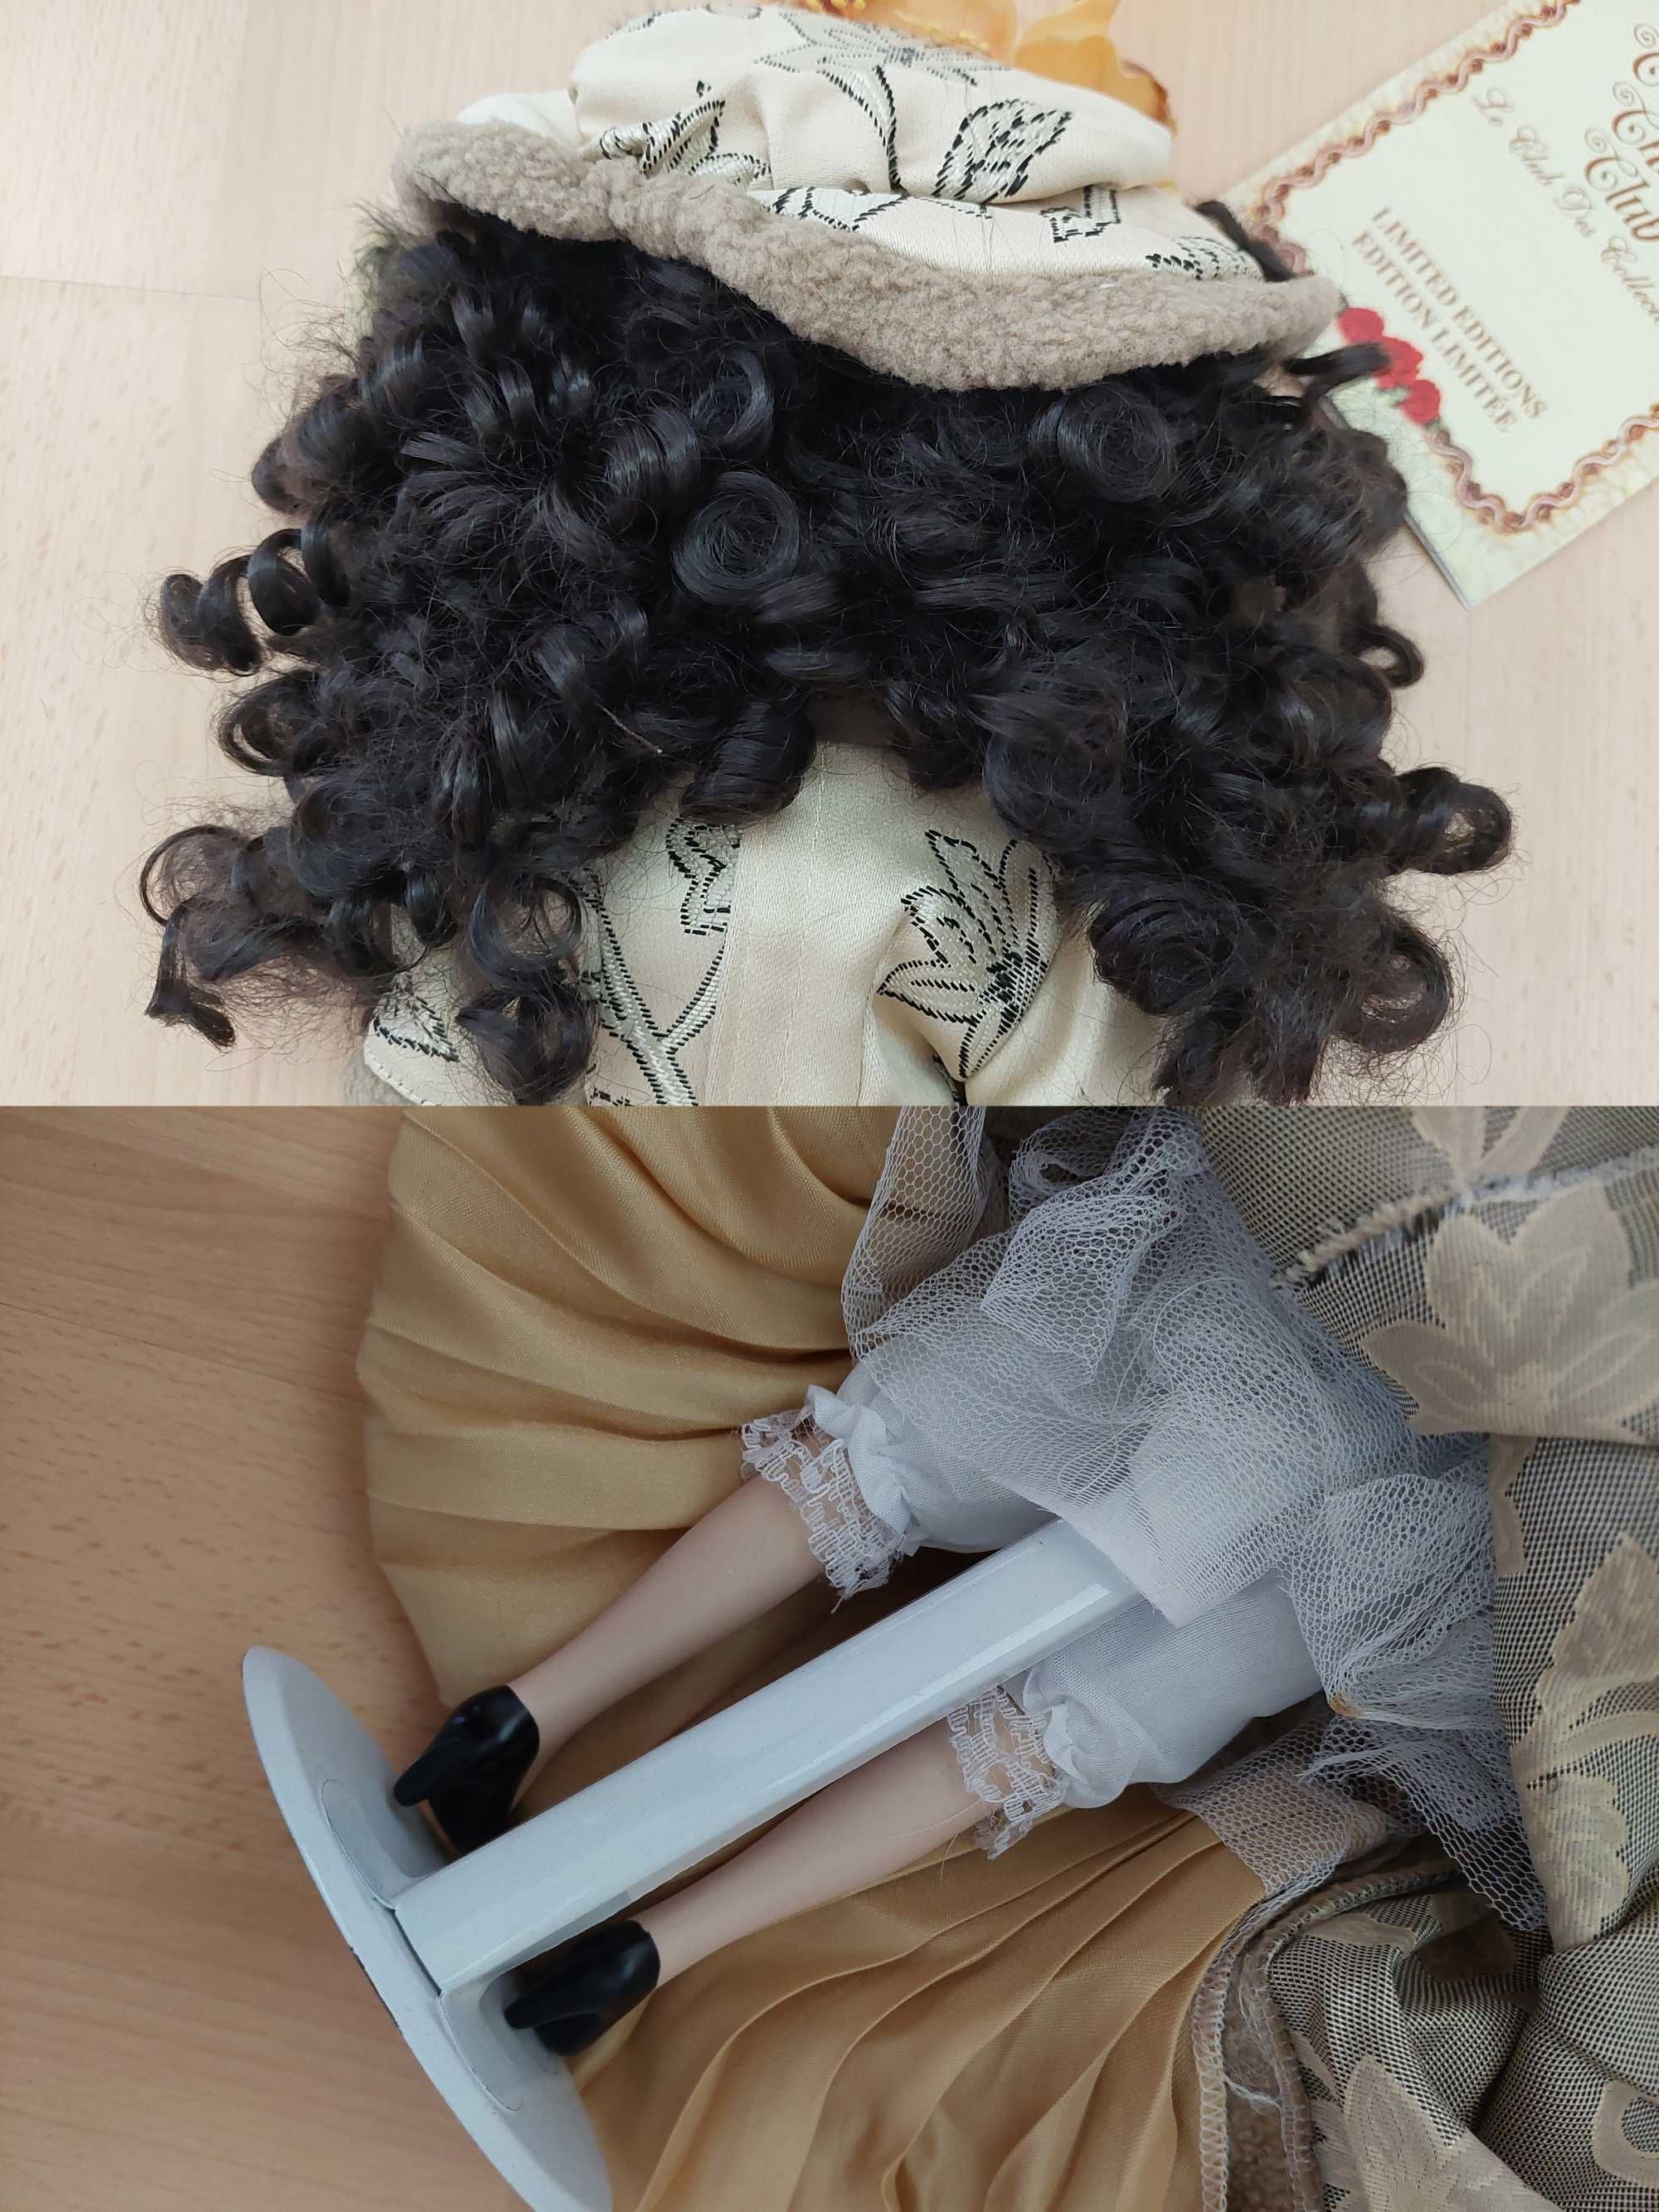 Автентични порцеланови кукли от чужбина